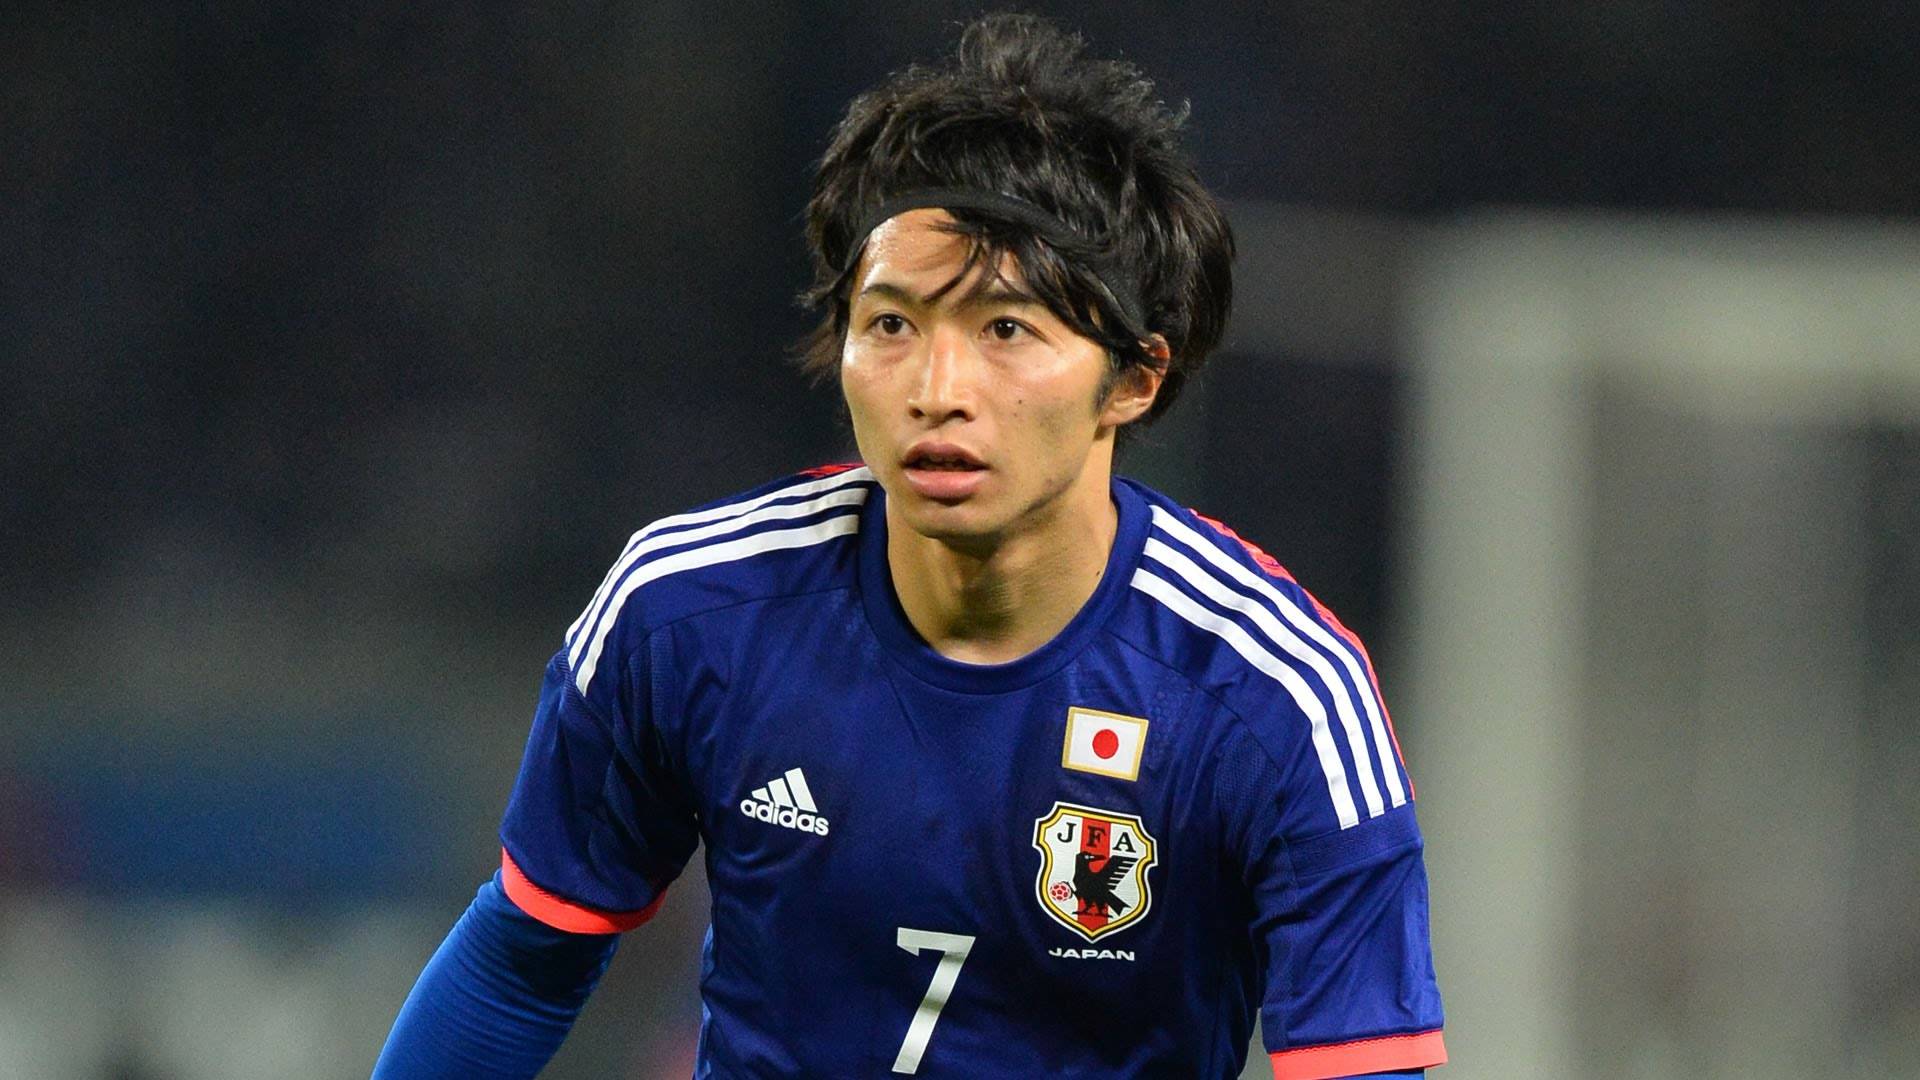 Gaku Shibasaki (柴崎 岳) age, position, salary, team, girlfriend, facts, football Career